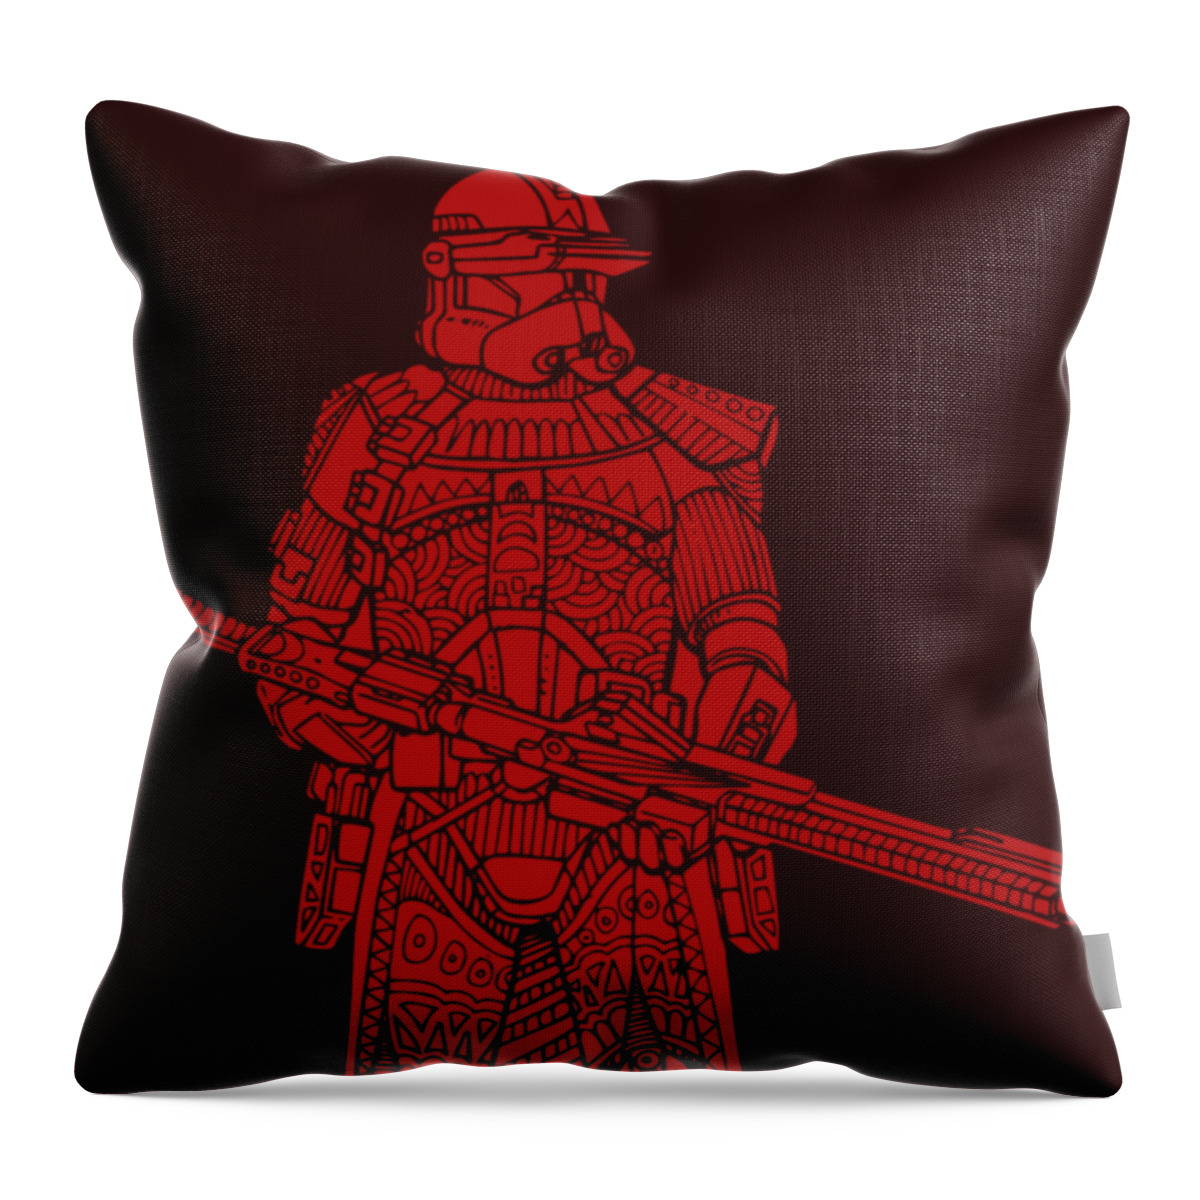 Stormtrooper Throw Pillow featuring the mixed media Stormtrooper Samurai - Star Wars Art - Red by Studio Grafiikka